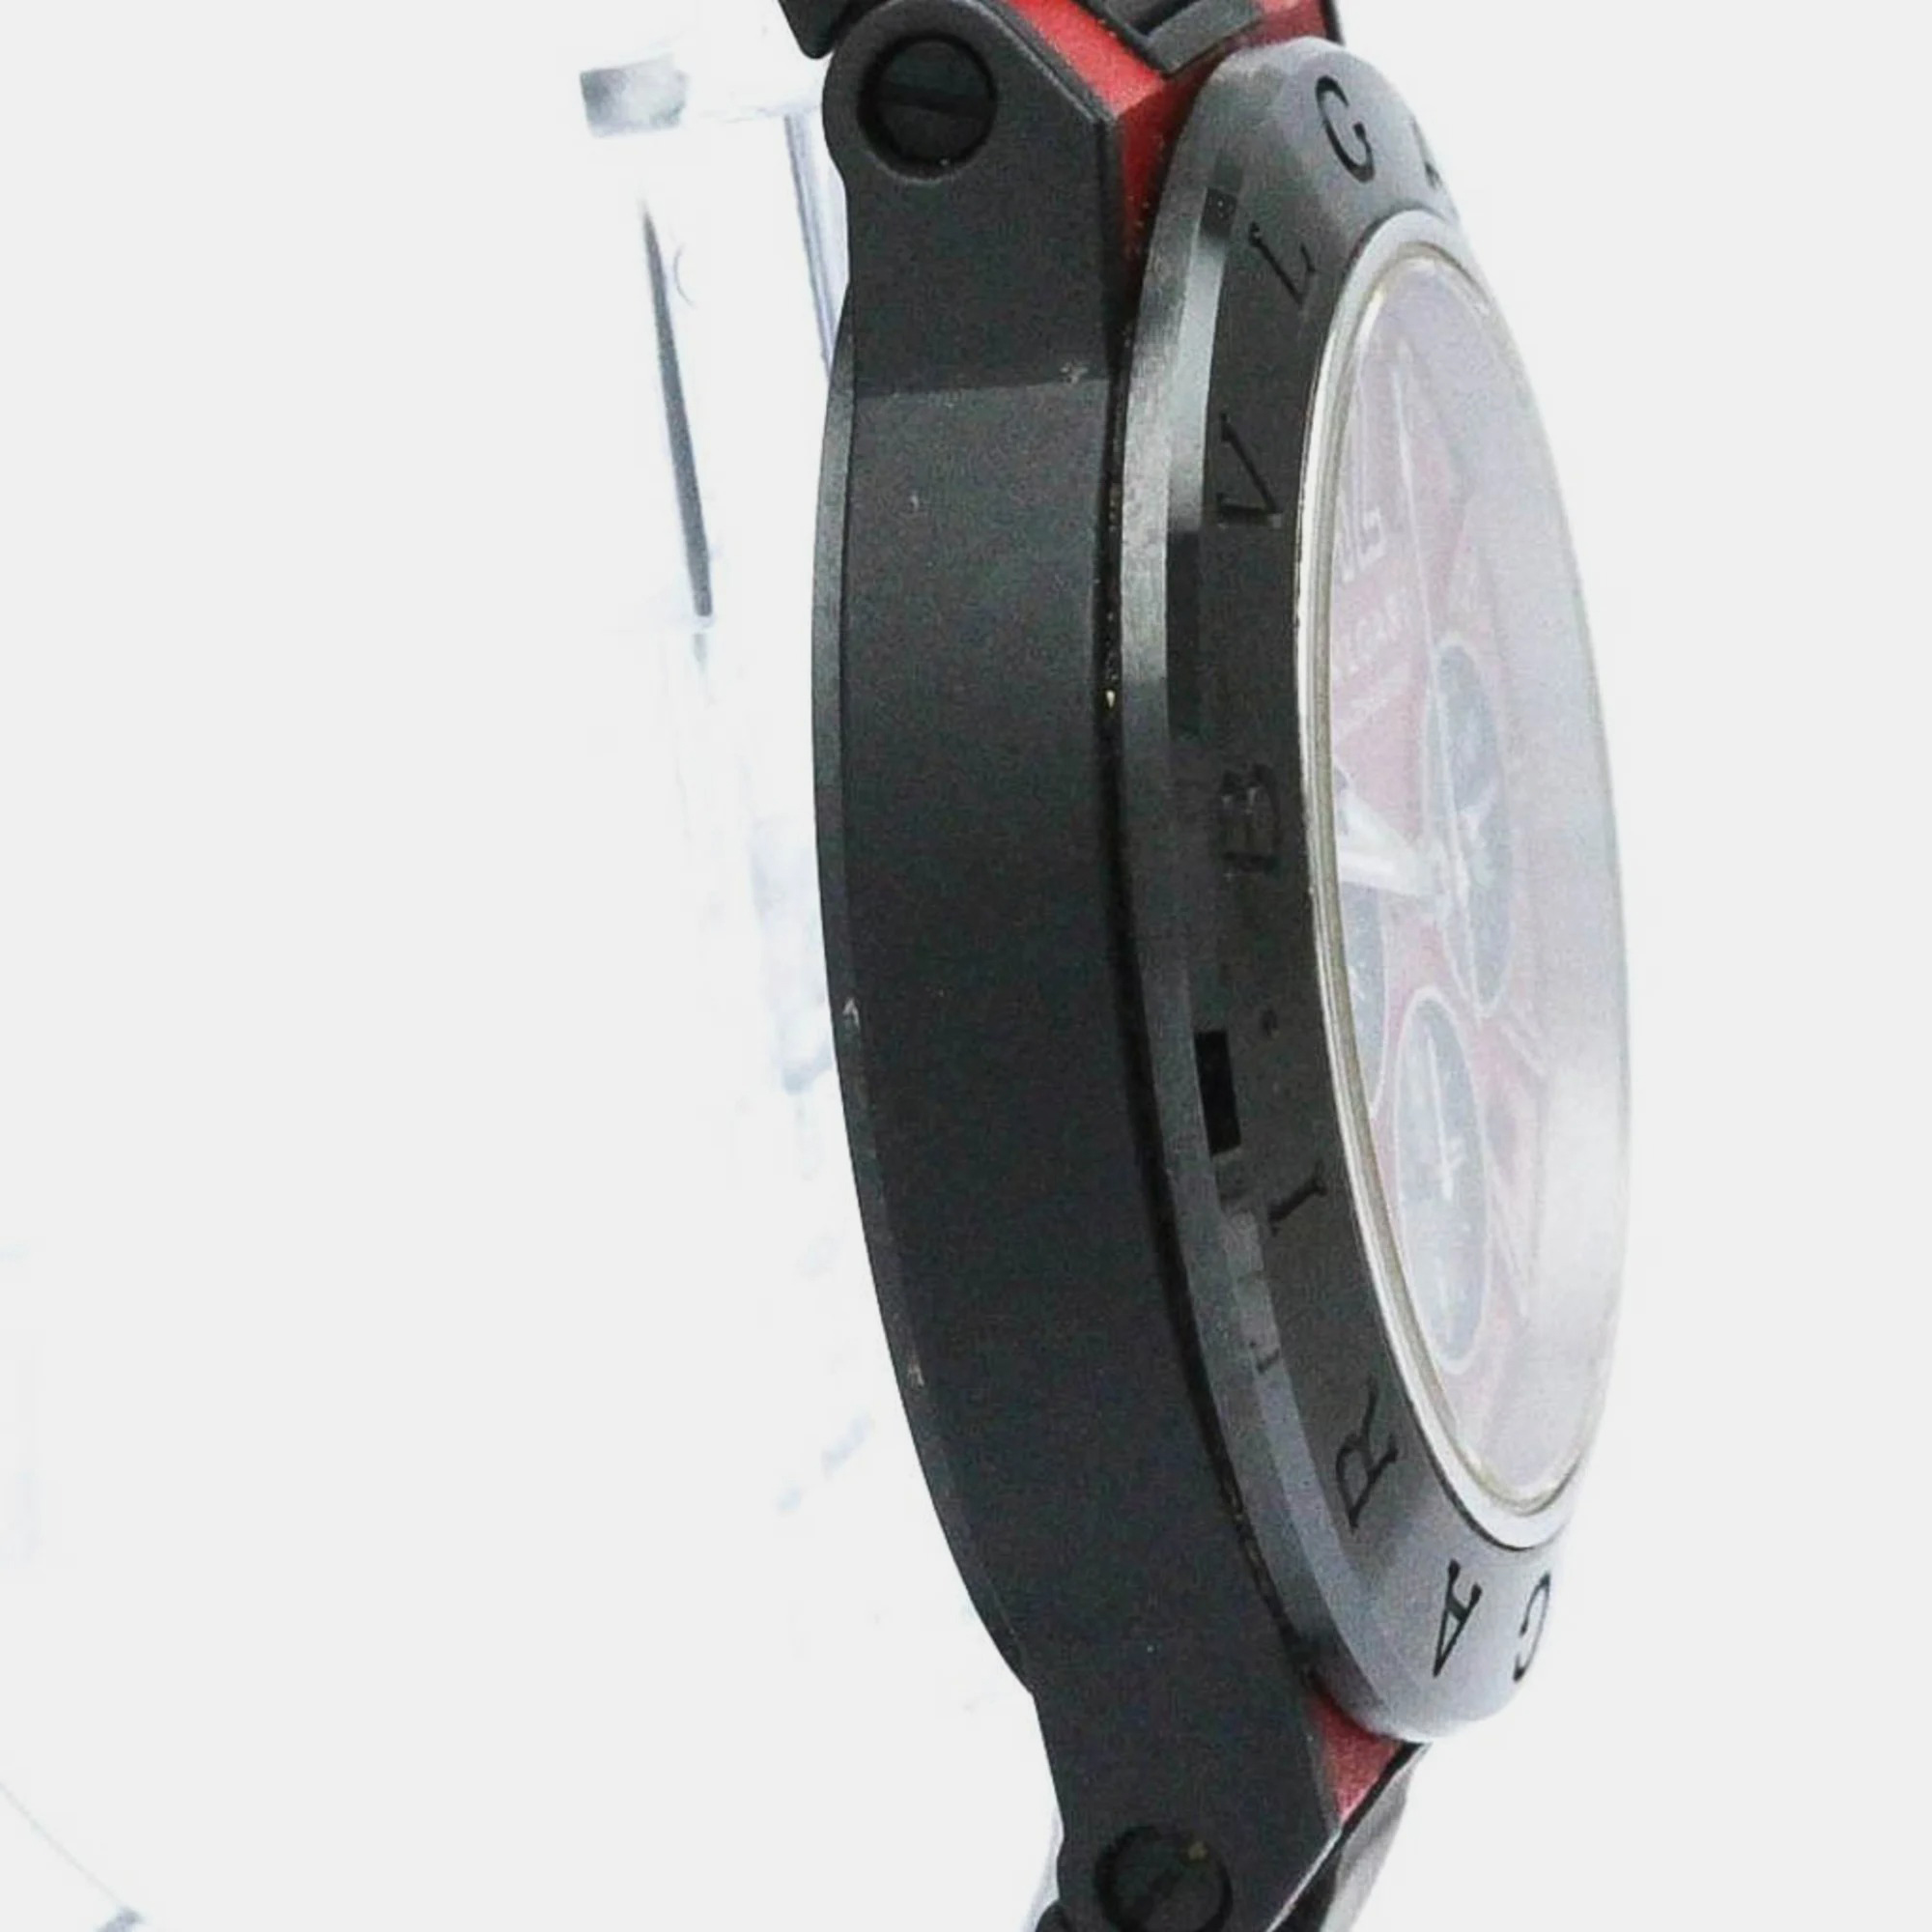 Bvlgari Red Ceramic Diagono DG42SMCCH Automatic Men's Wristwatch 42 Mm